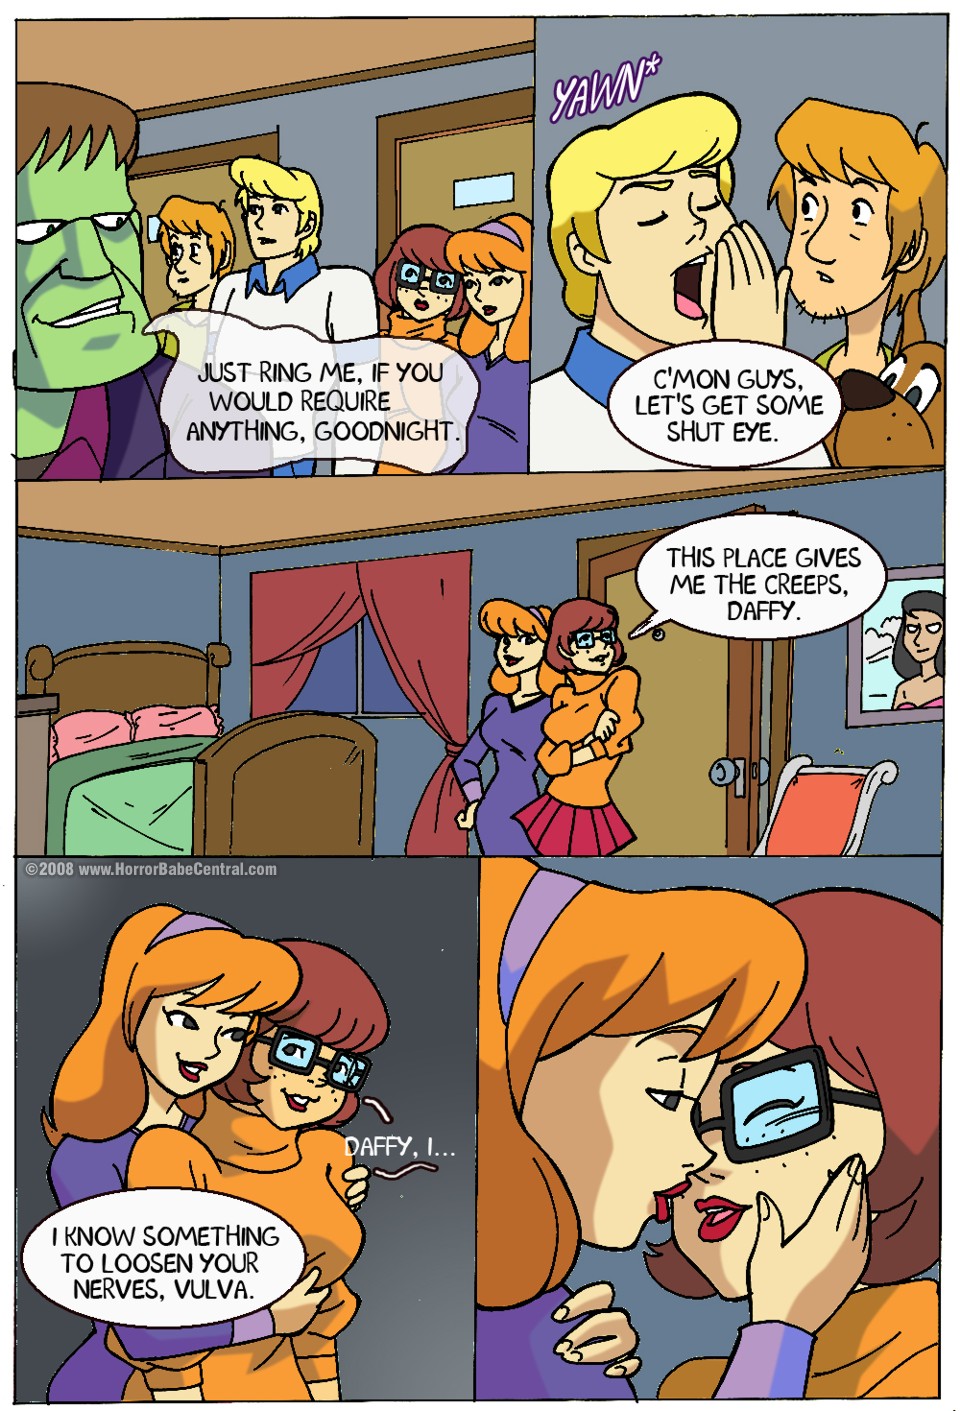 Human Scooby Doo Porn - Cartoon Scooby Doo | Sex Pictures Pass